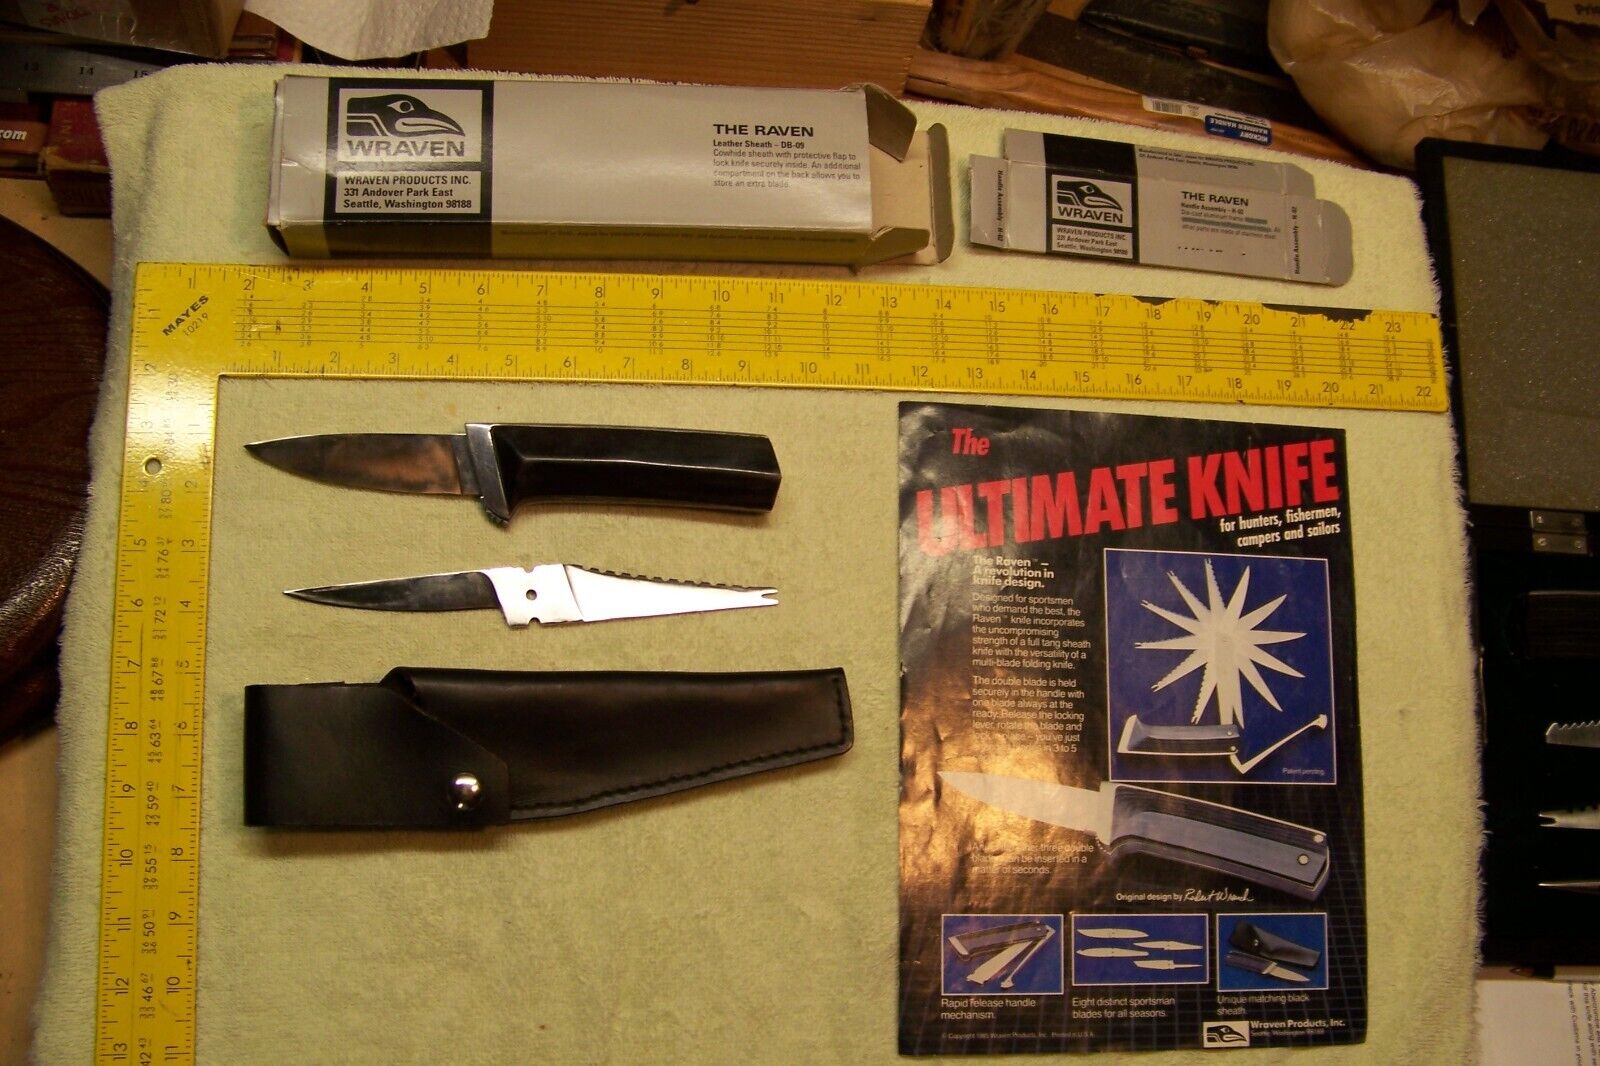 WRAVEN seki japan multi blade hunting knife design by Robert Wrench 2 sets 1986